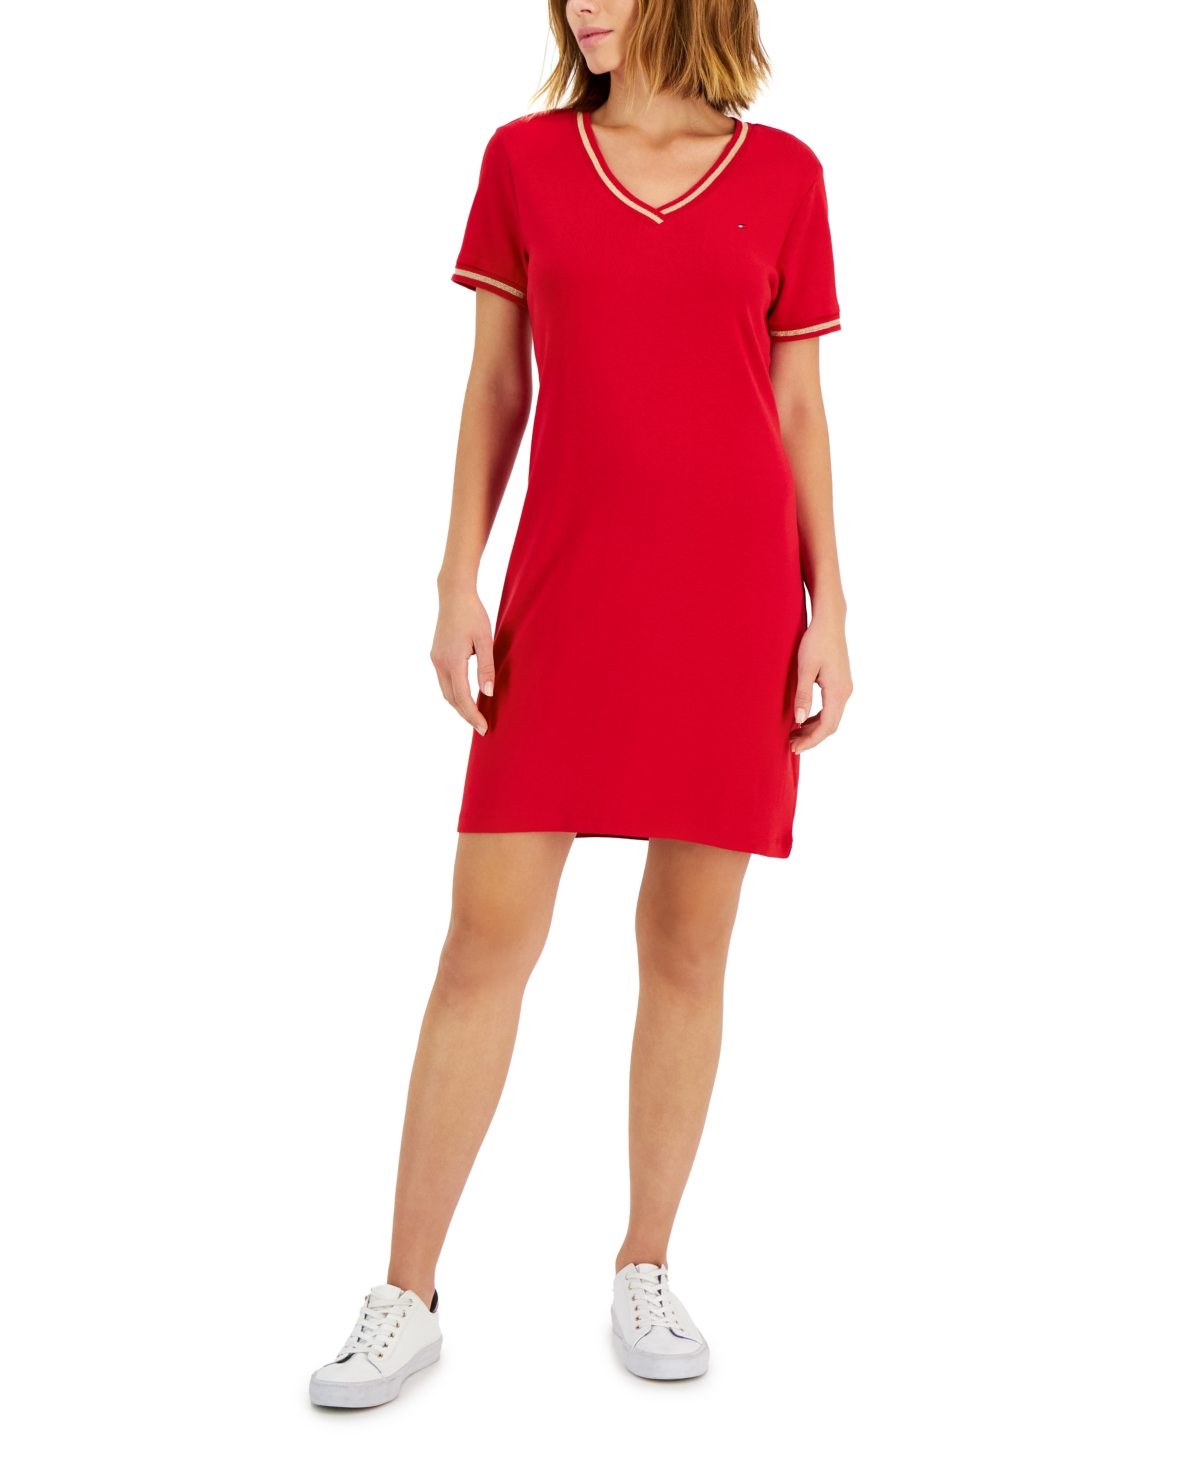 Tommy Hilfiger Women's Cotton V-Neck Short Sleeve Dress